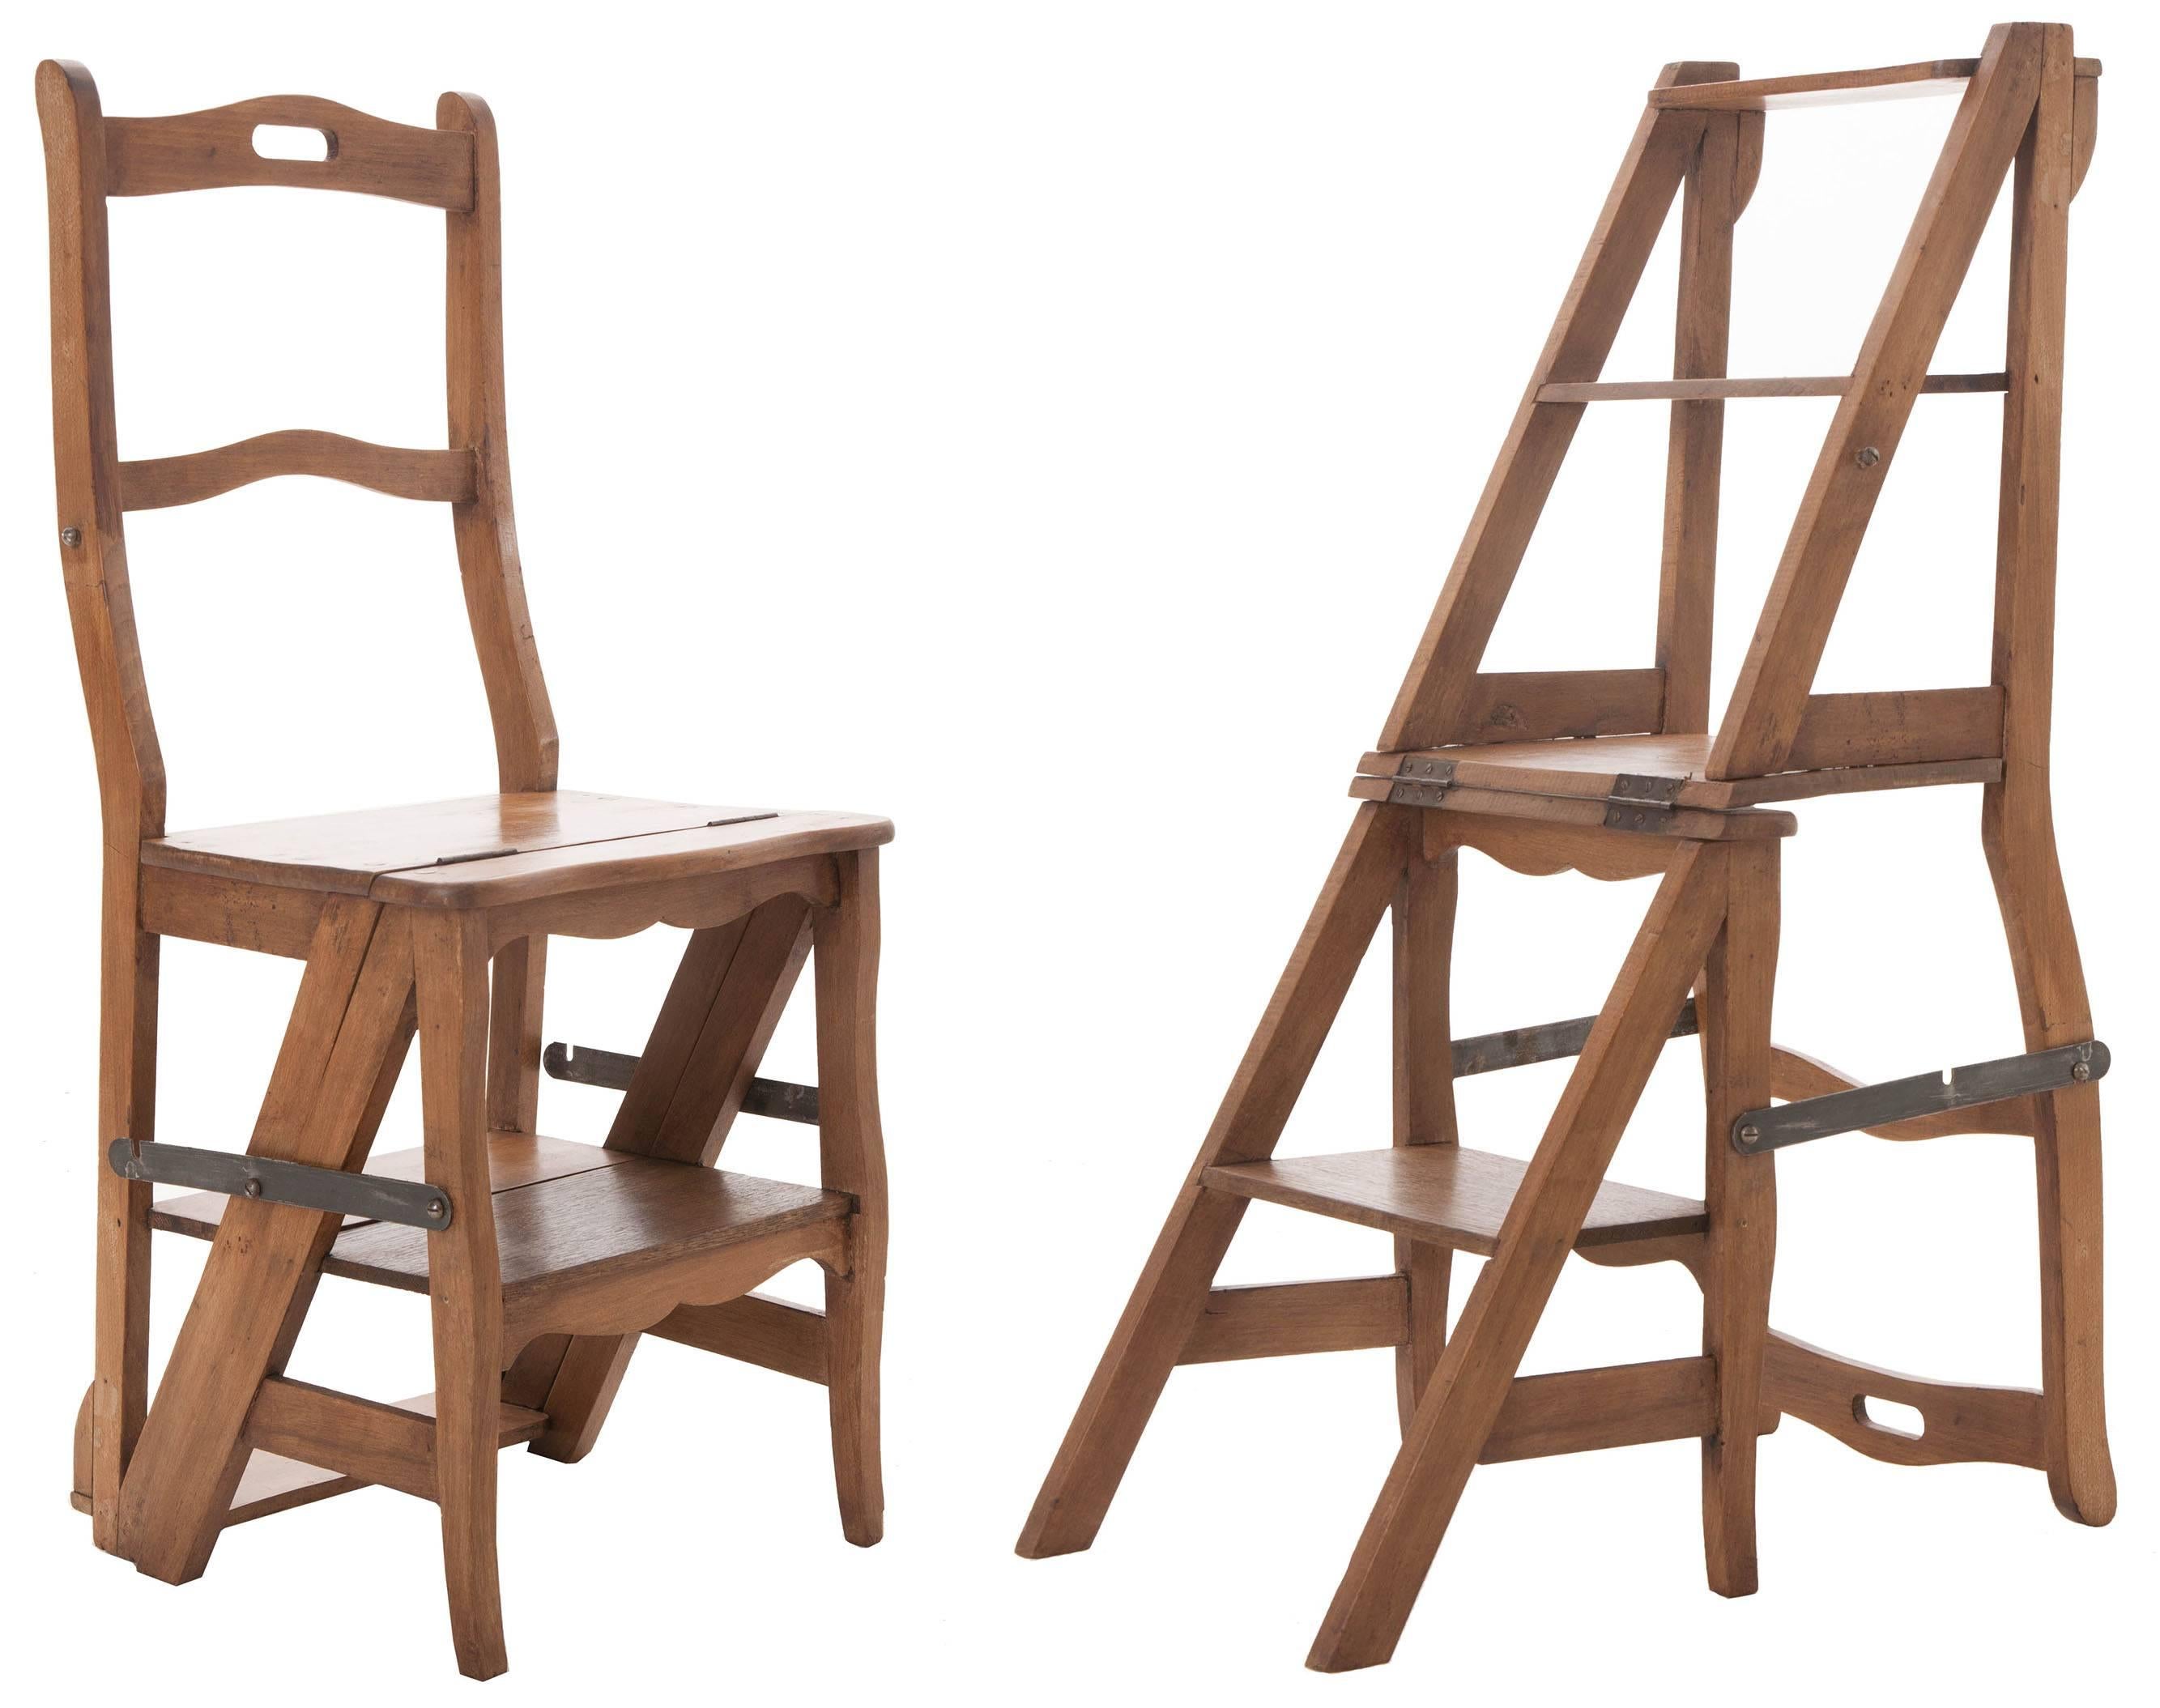 French Vintage Oak Ladder Chair